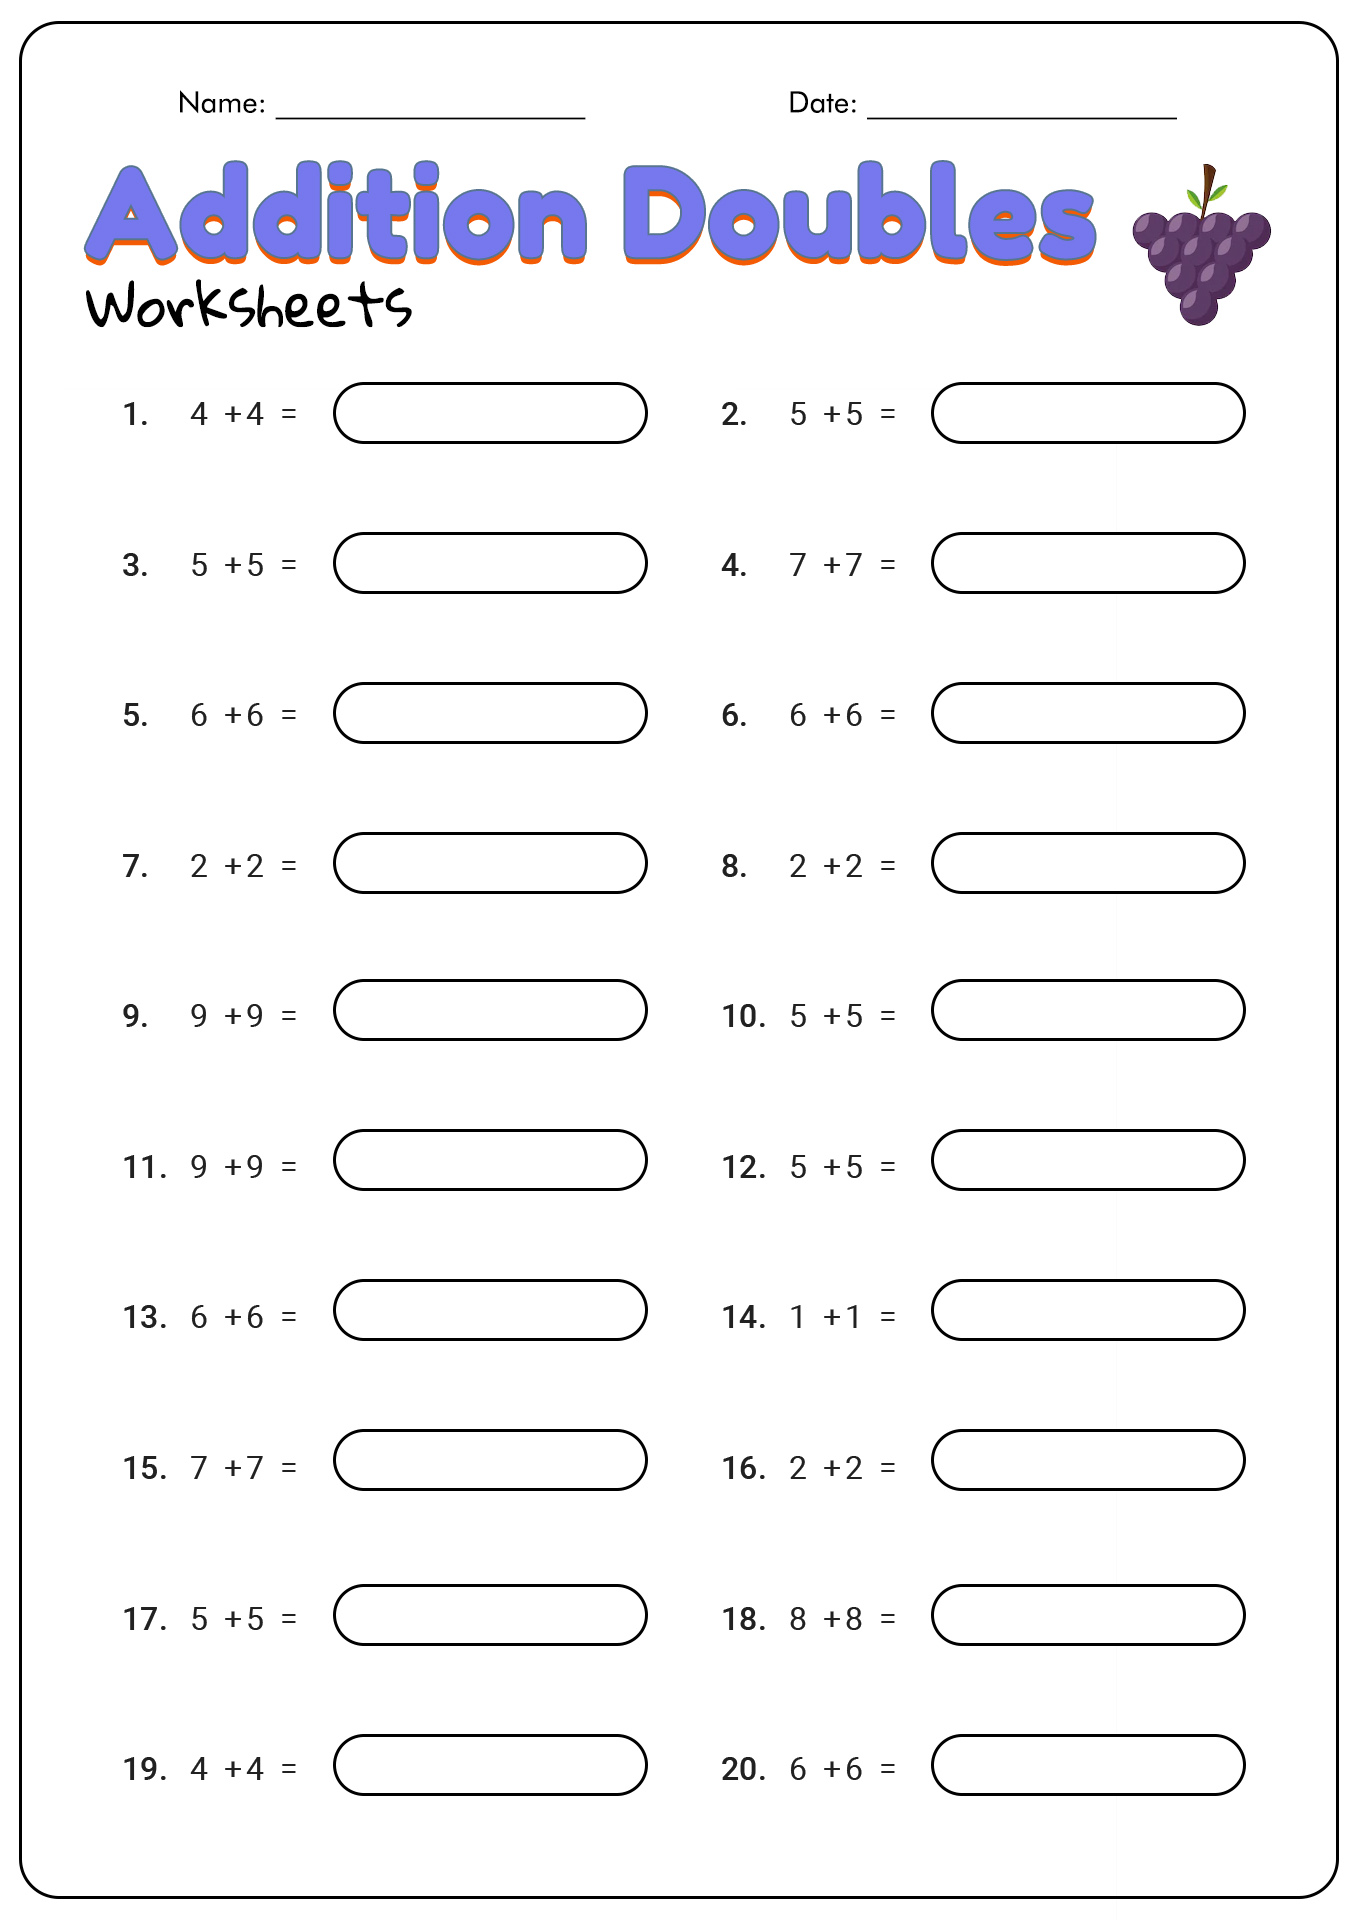 20 Doubles Fact Practice Worksheet - Free PDF at worksheeto.com